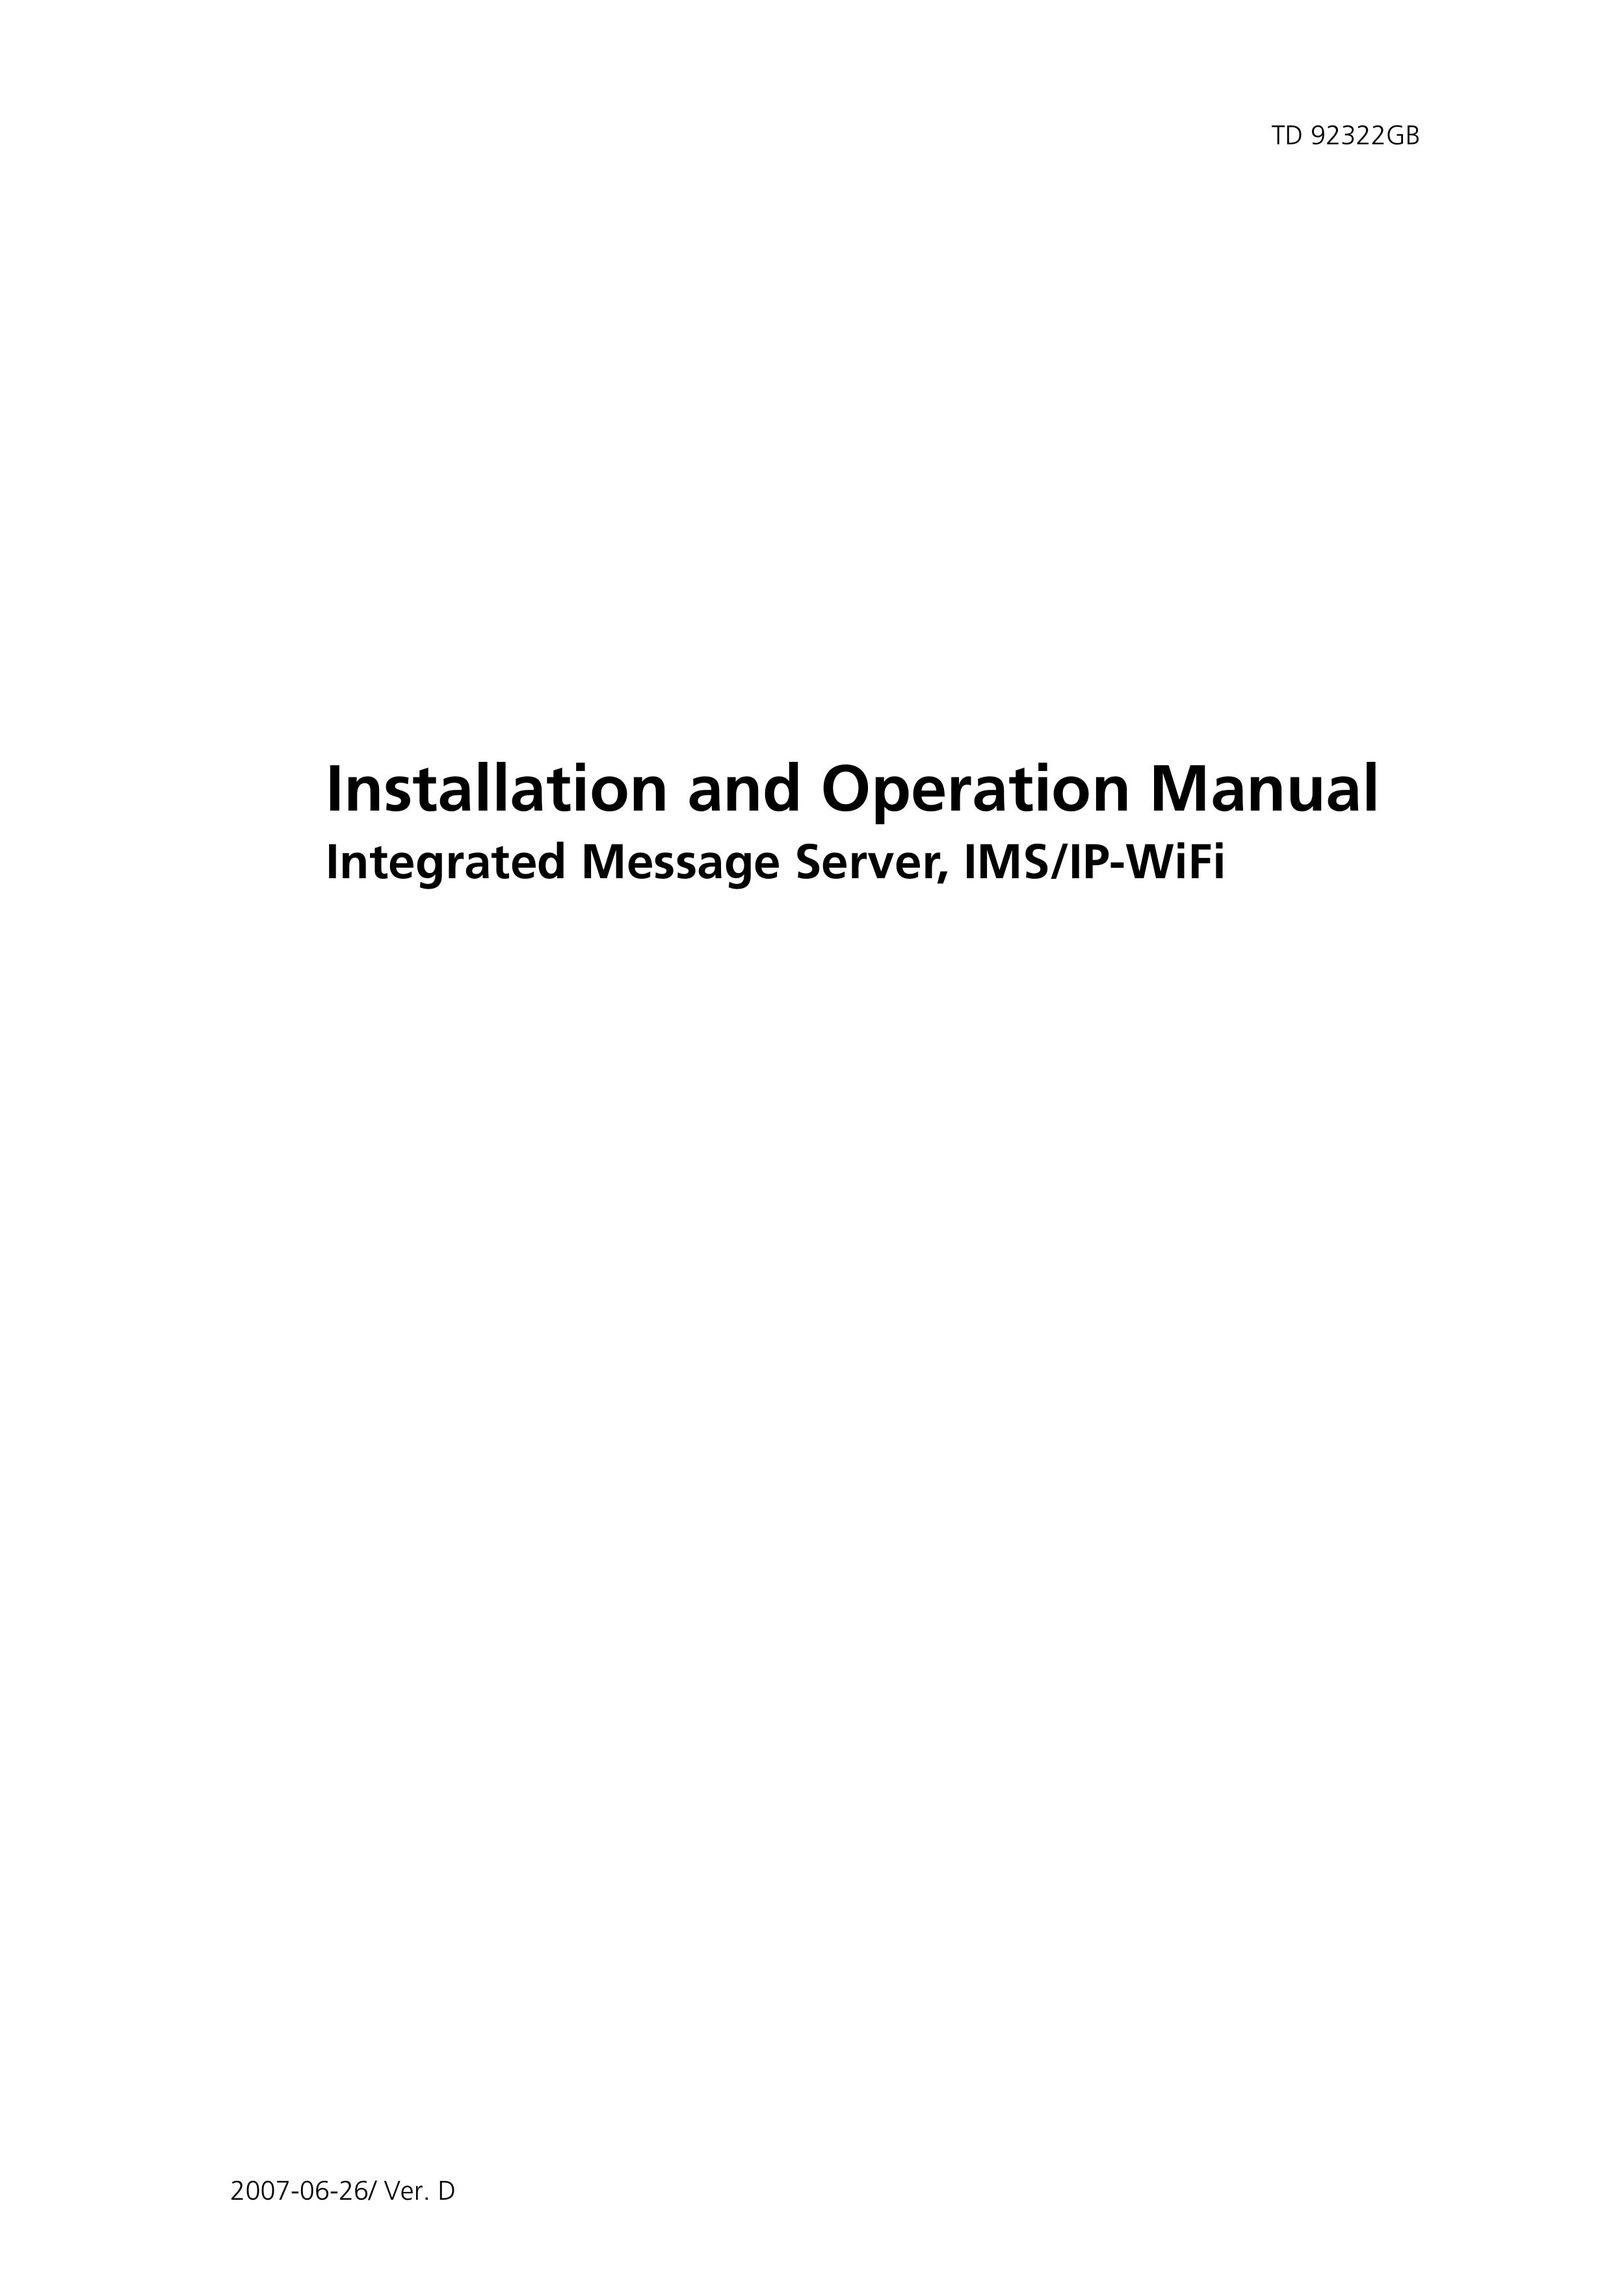 Cisco Systems TD 92322GB Server User Manual